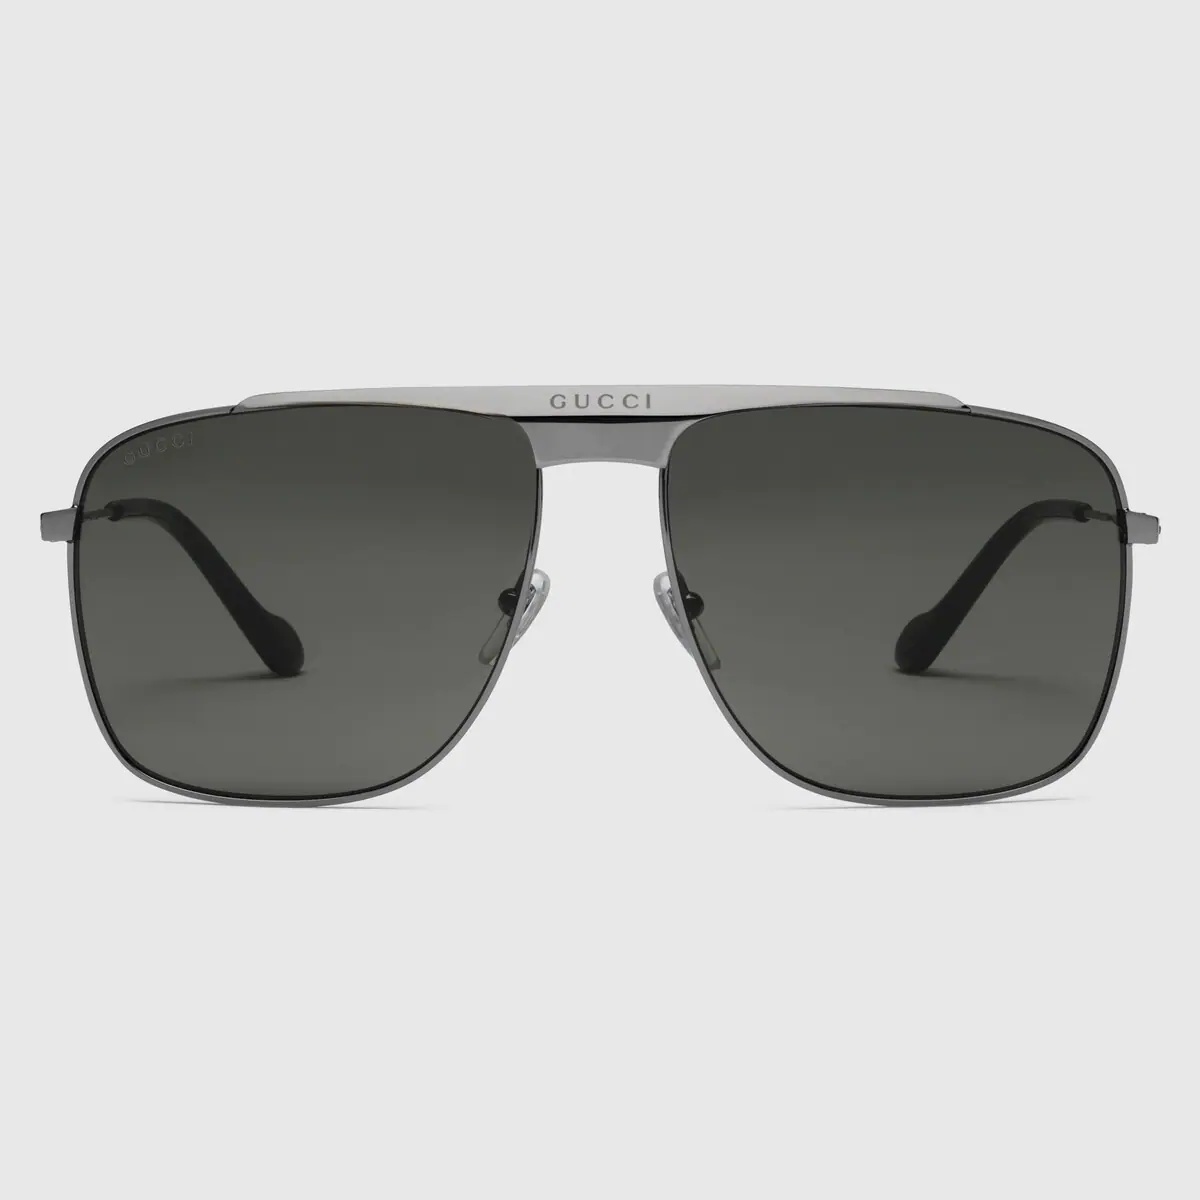 Aviator sunglasses - 1